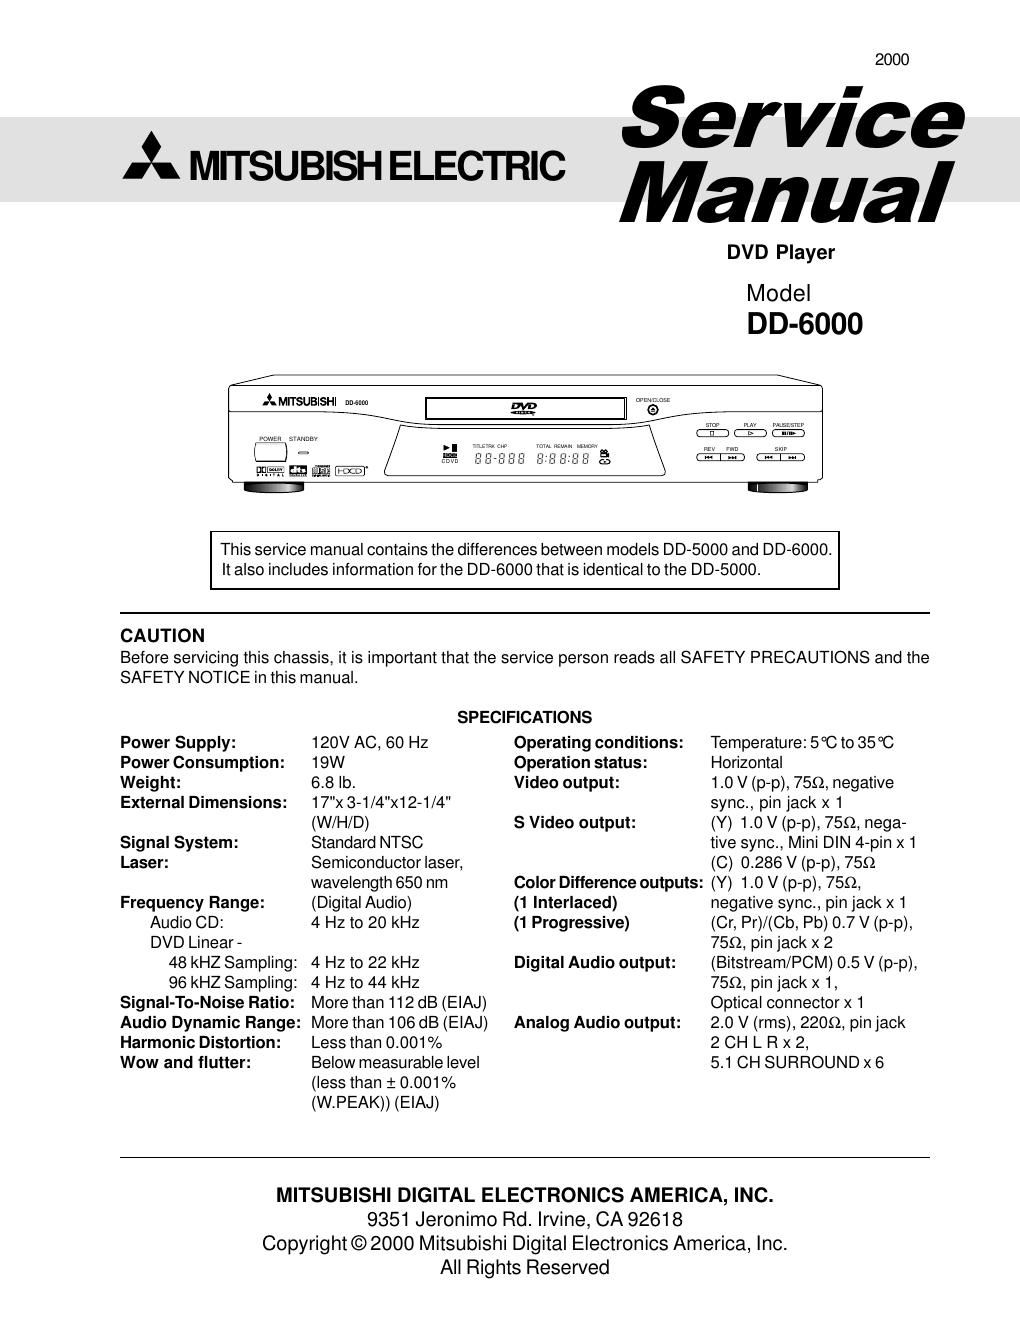 mitsubishi dd 6000 service manual